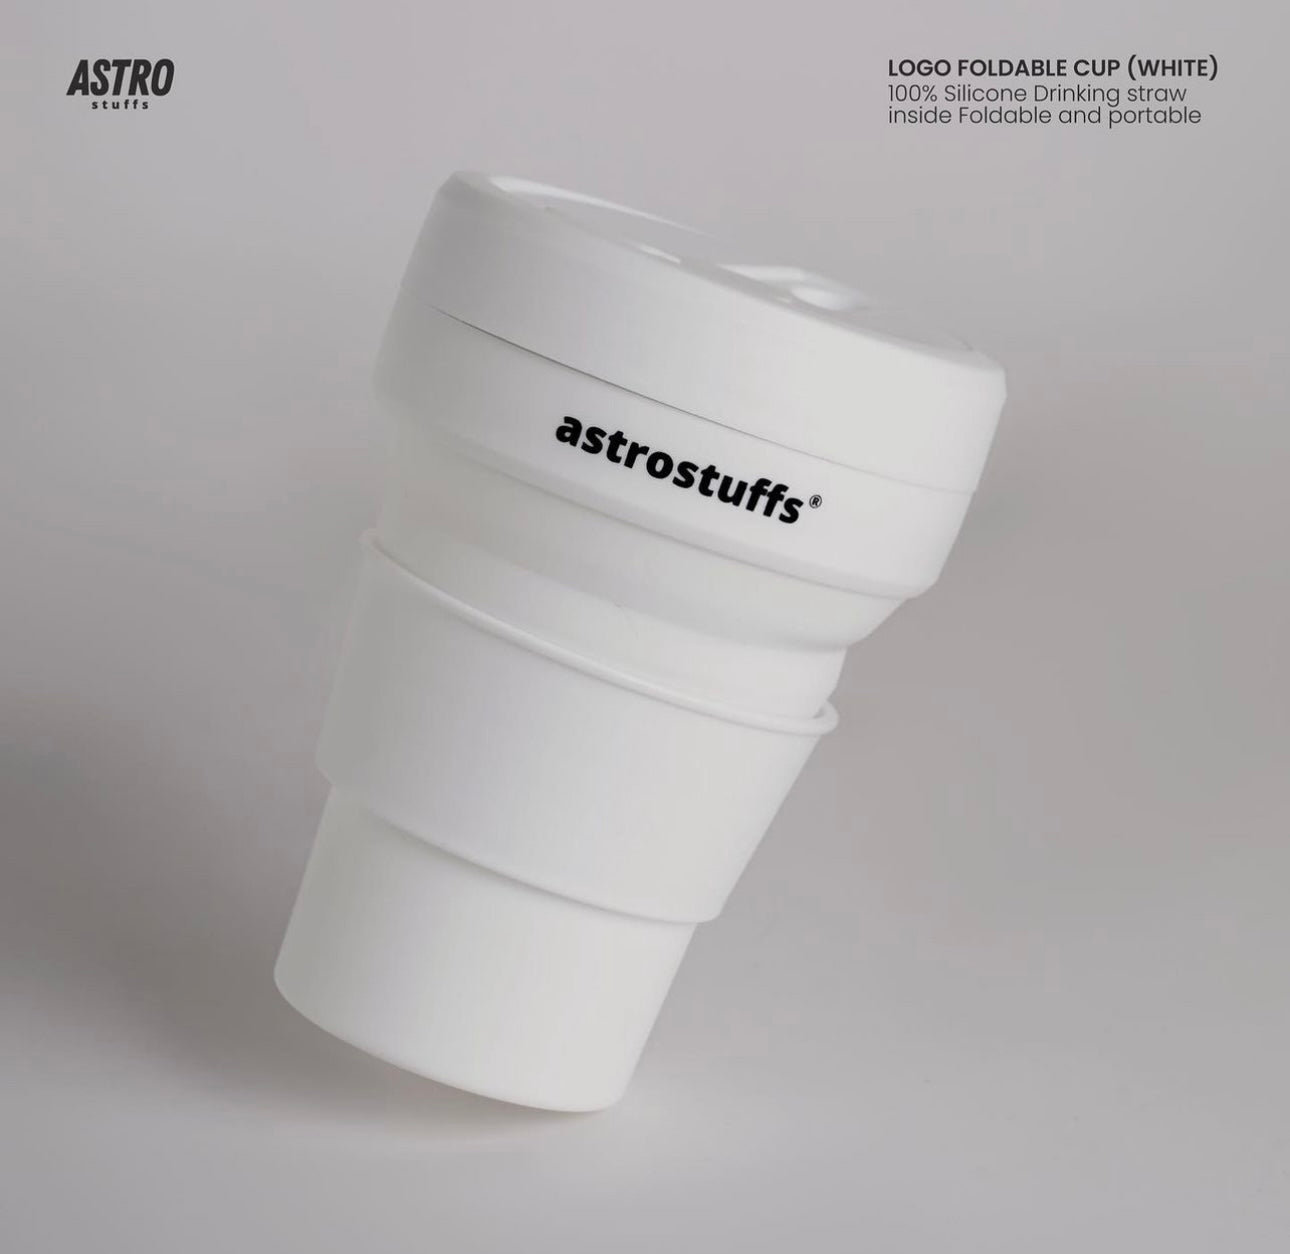 bright AstroStuffs logo folderble cup